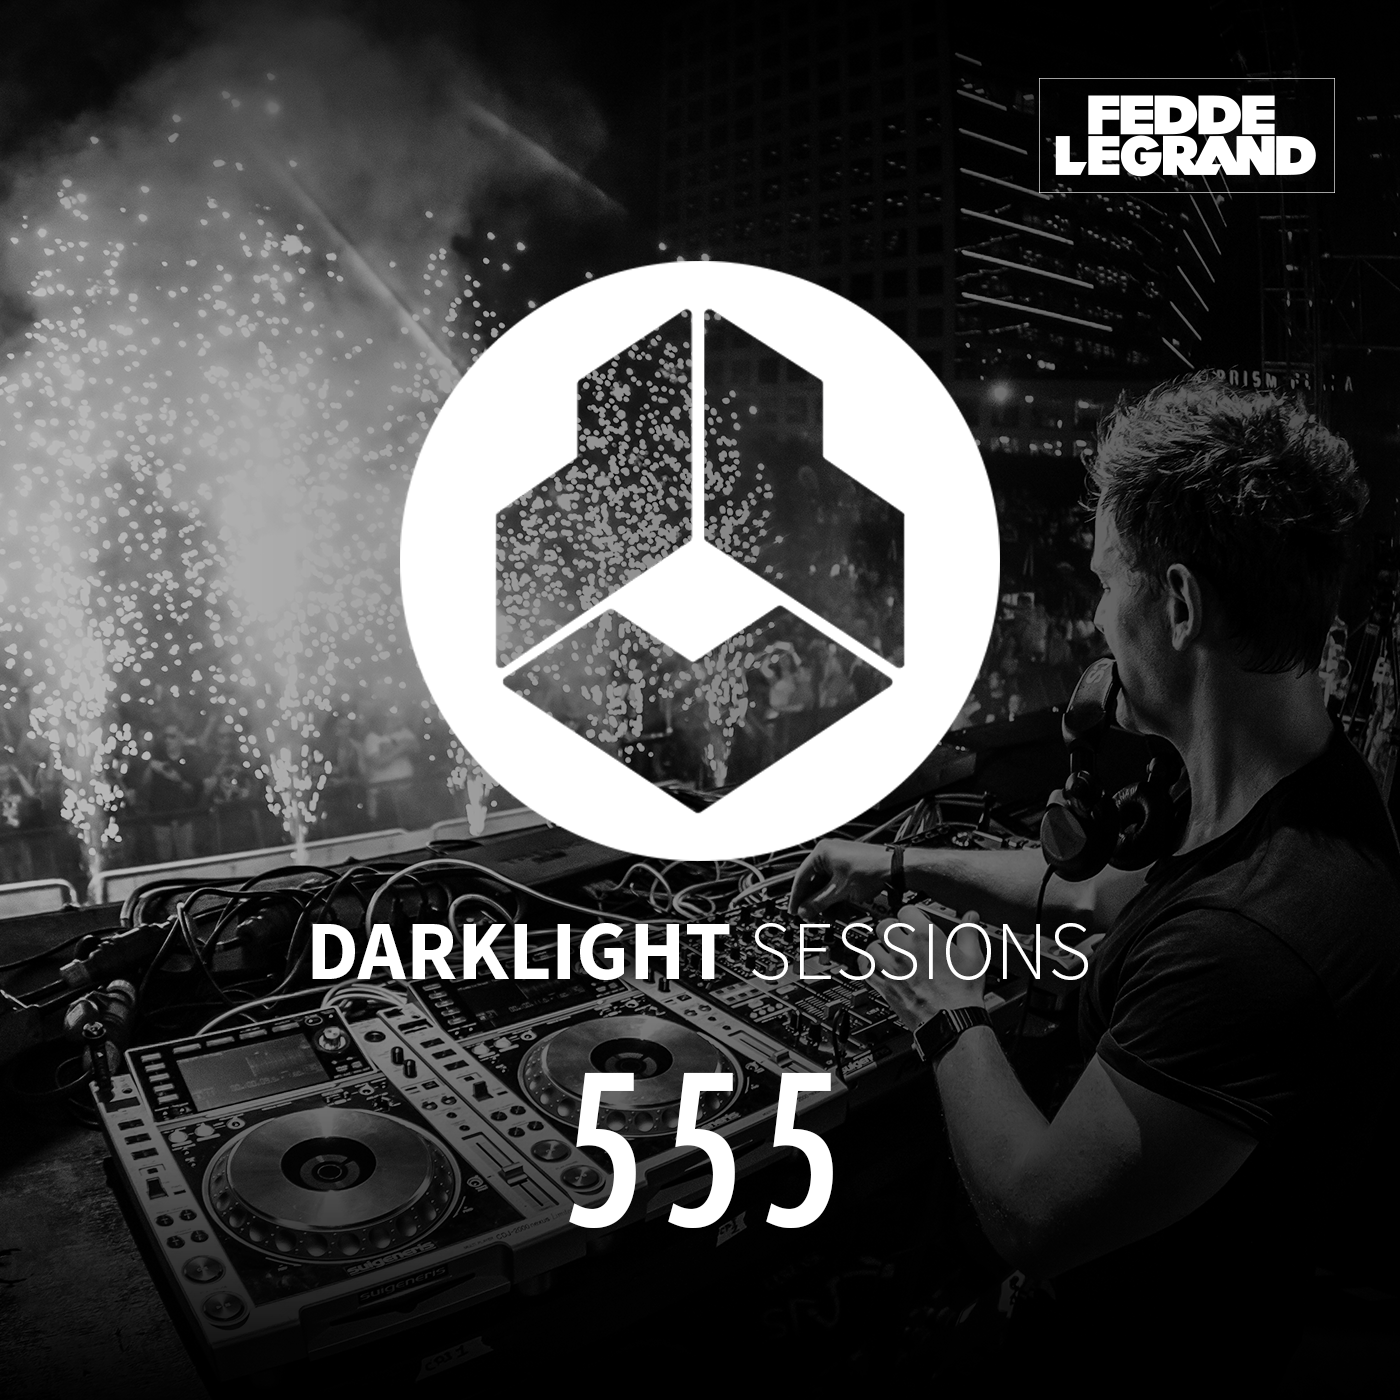 Darklight Sessions 555